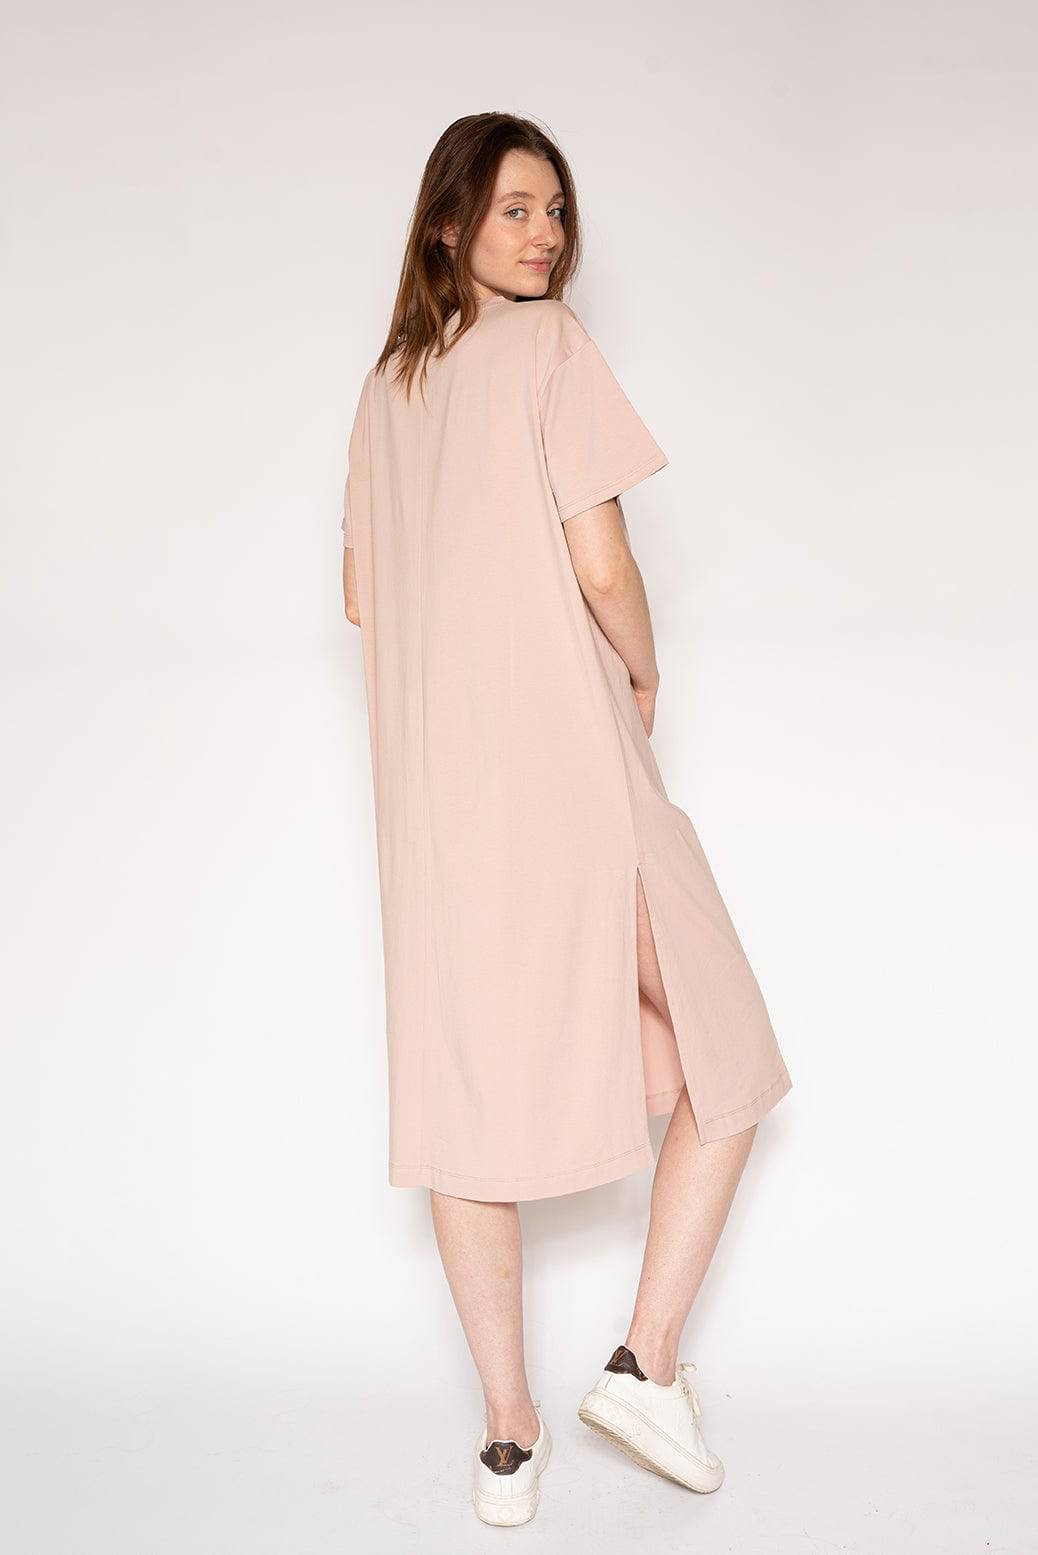 Midi Dress - Adobe Rose - LATTELOVE Co.